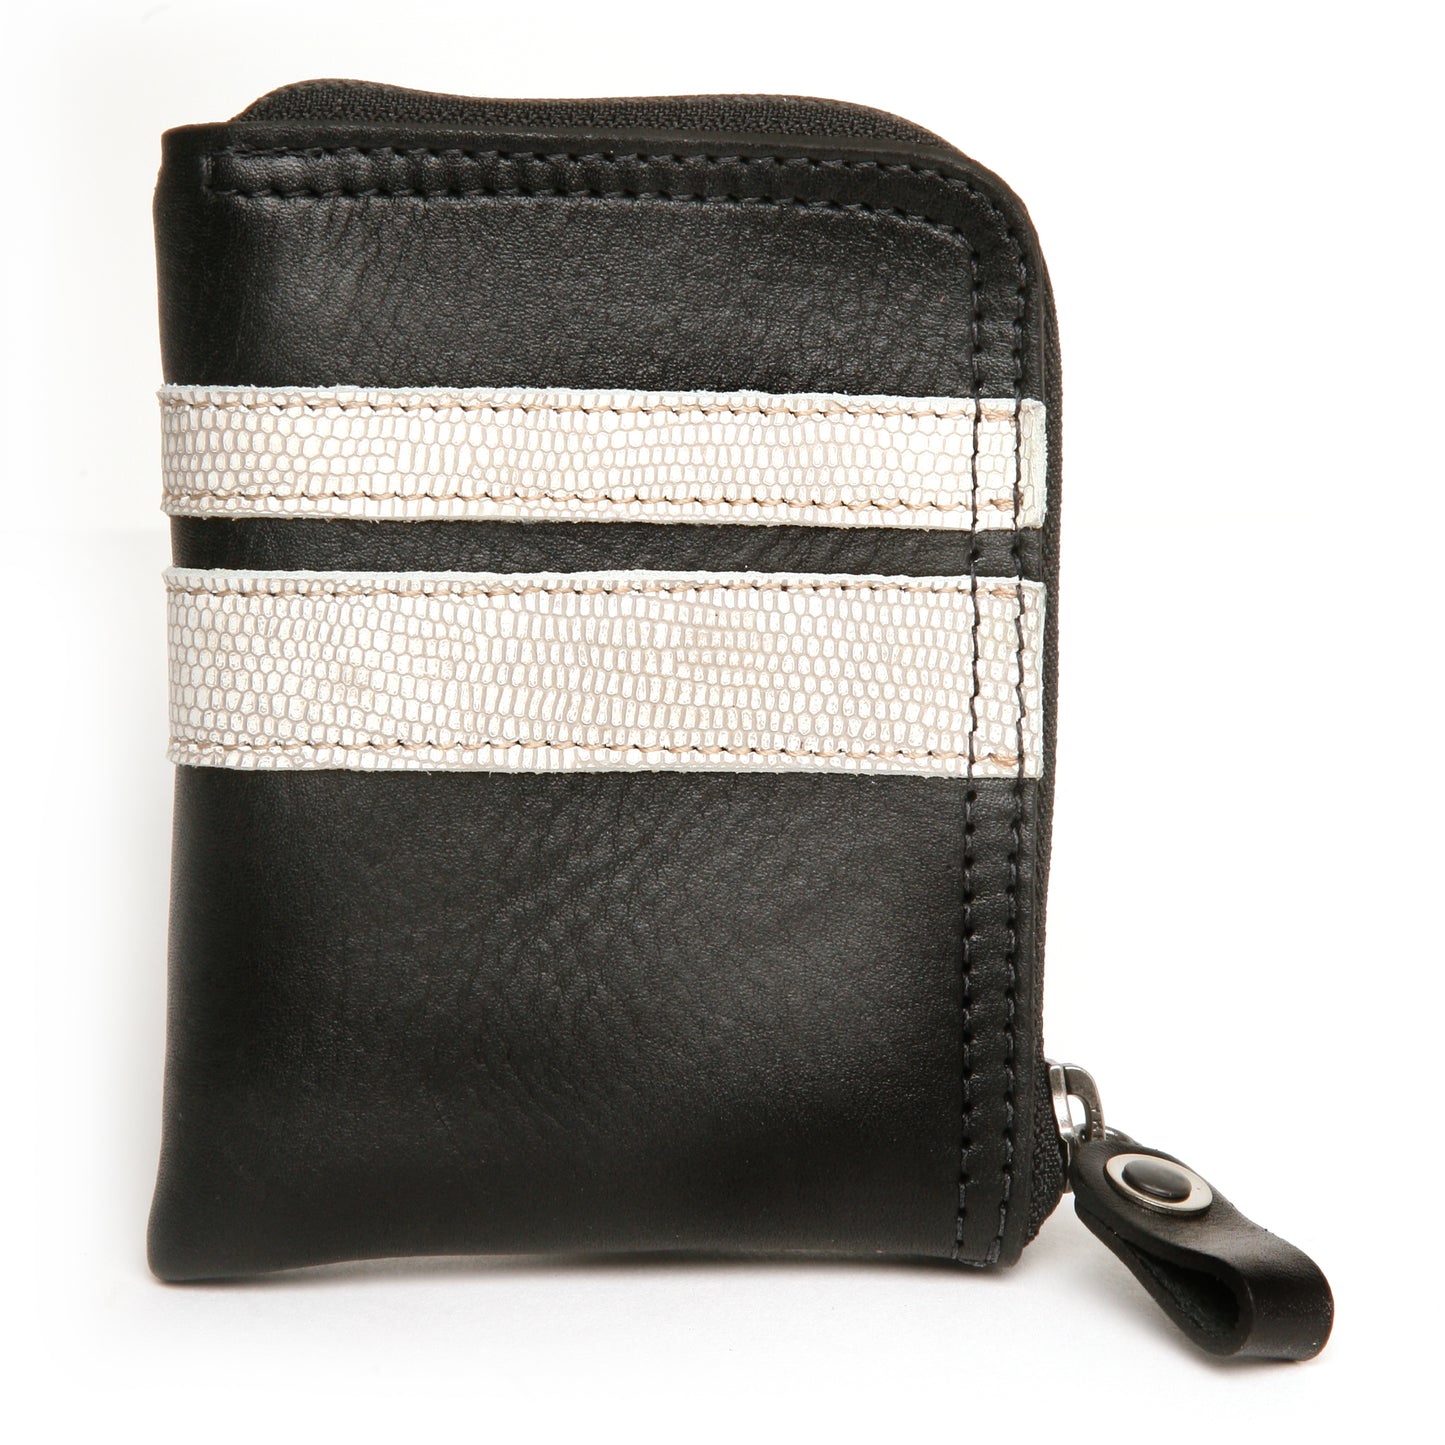 ZIP wallet striped black